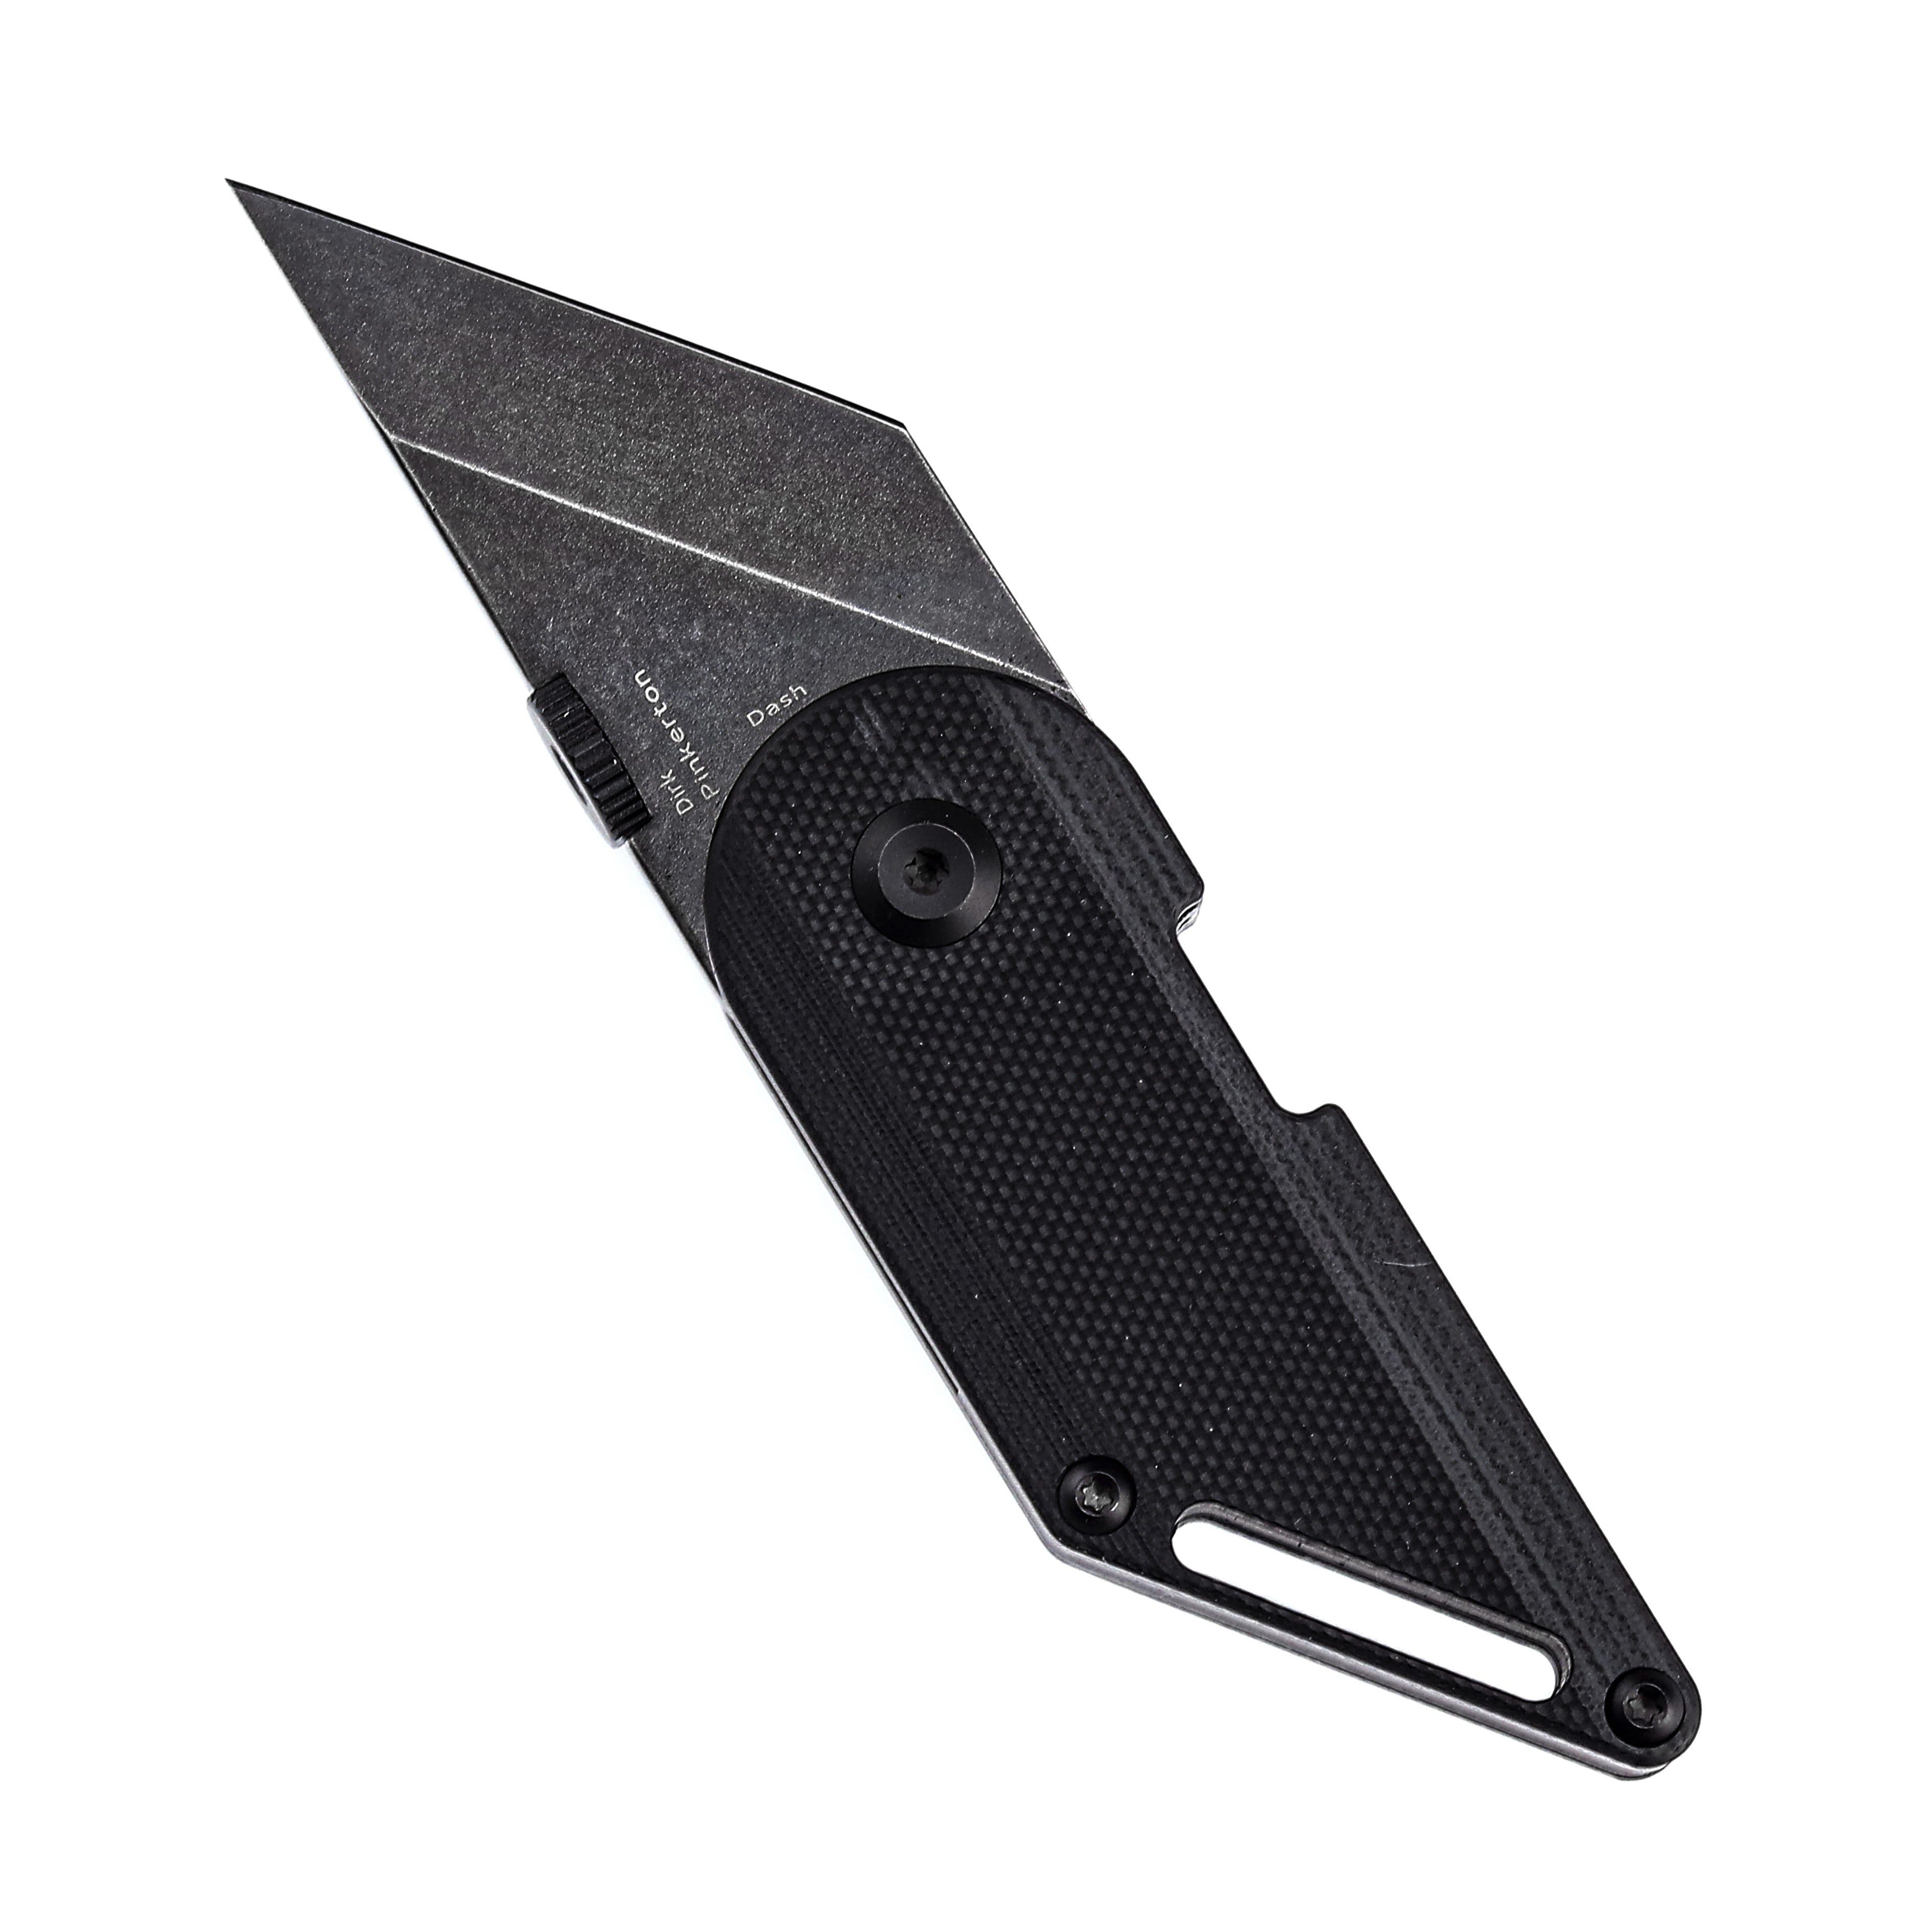 Kansept 刀具 Dash T3045A1 154CM 刀片黑色 G10 内衬锁 Edc 刀具